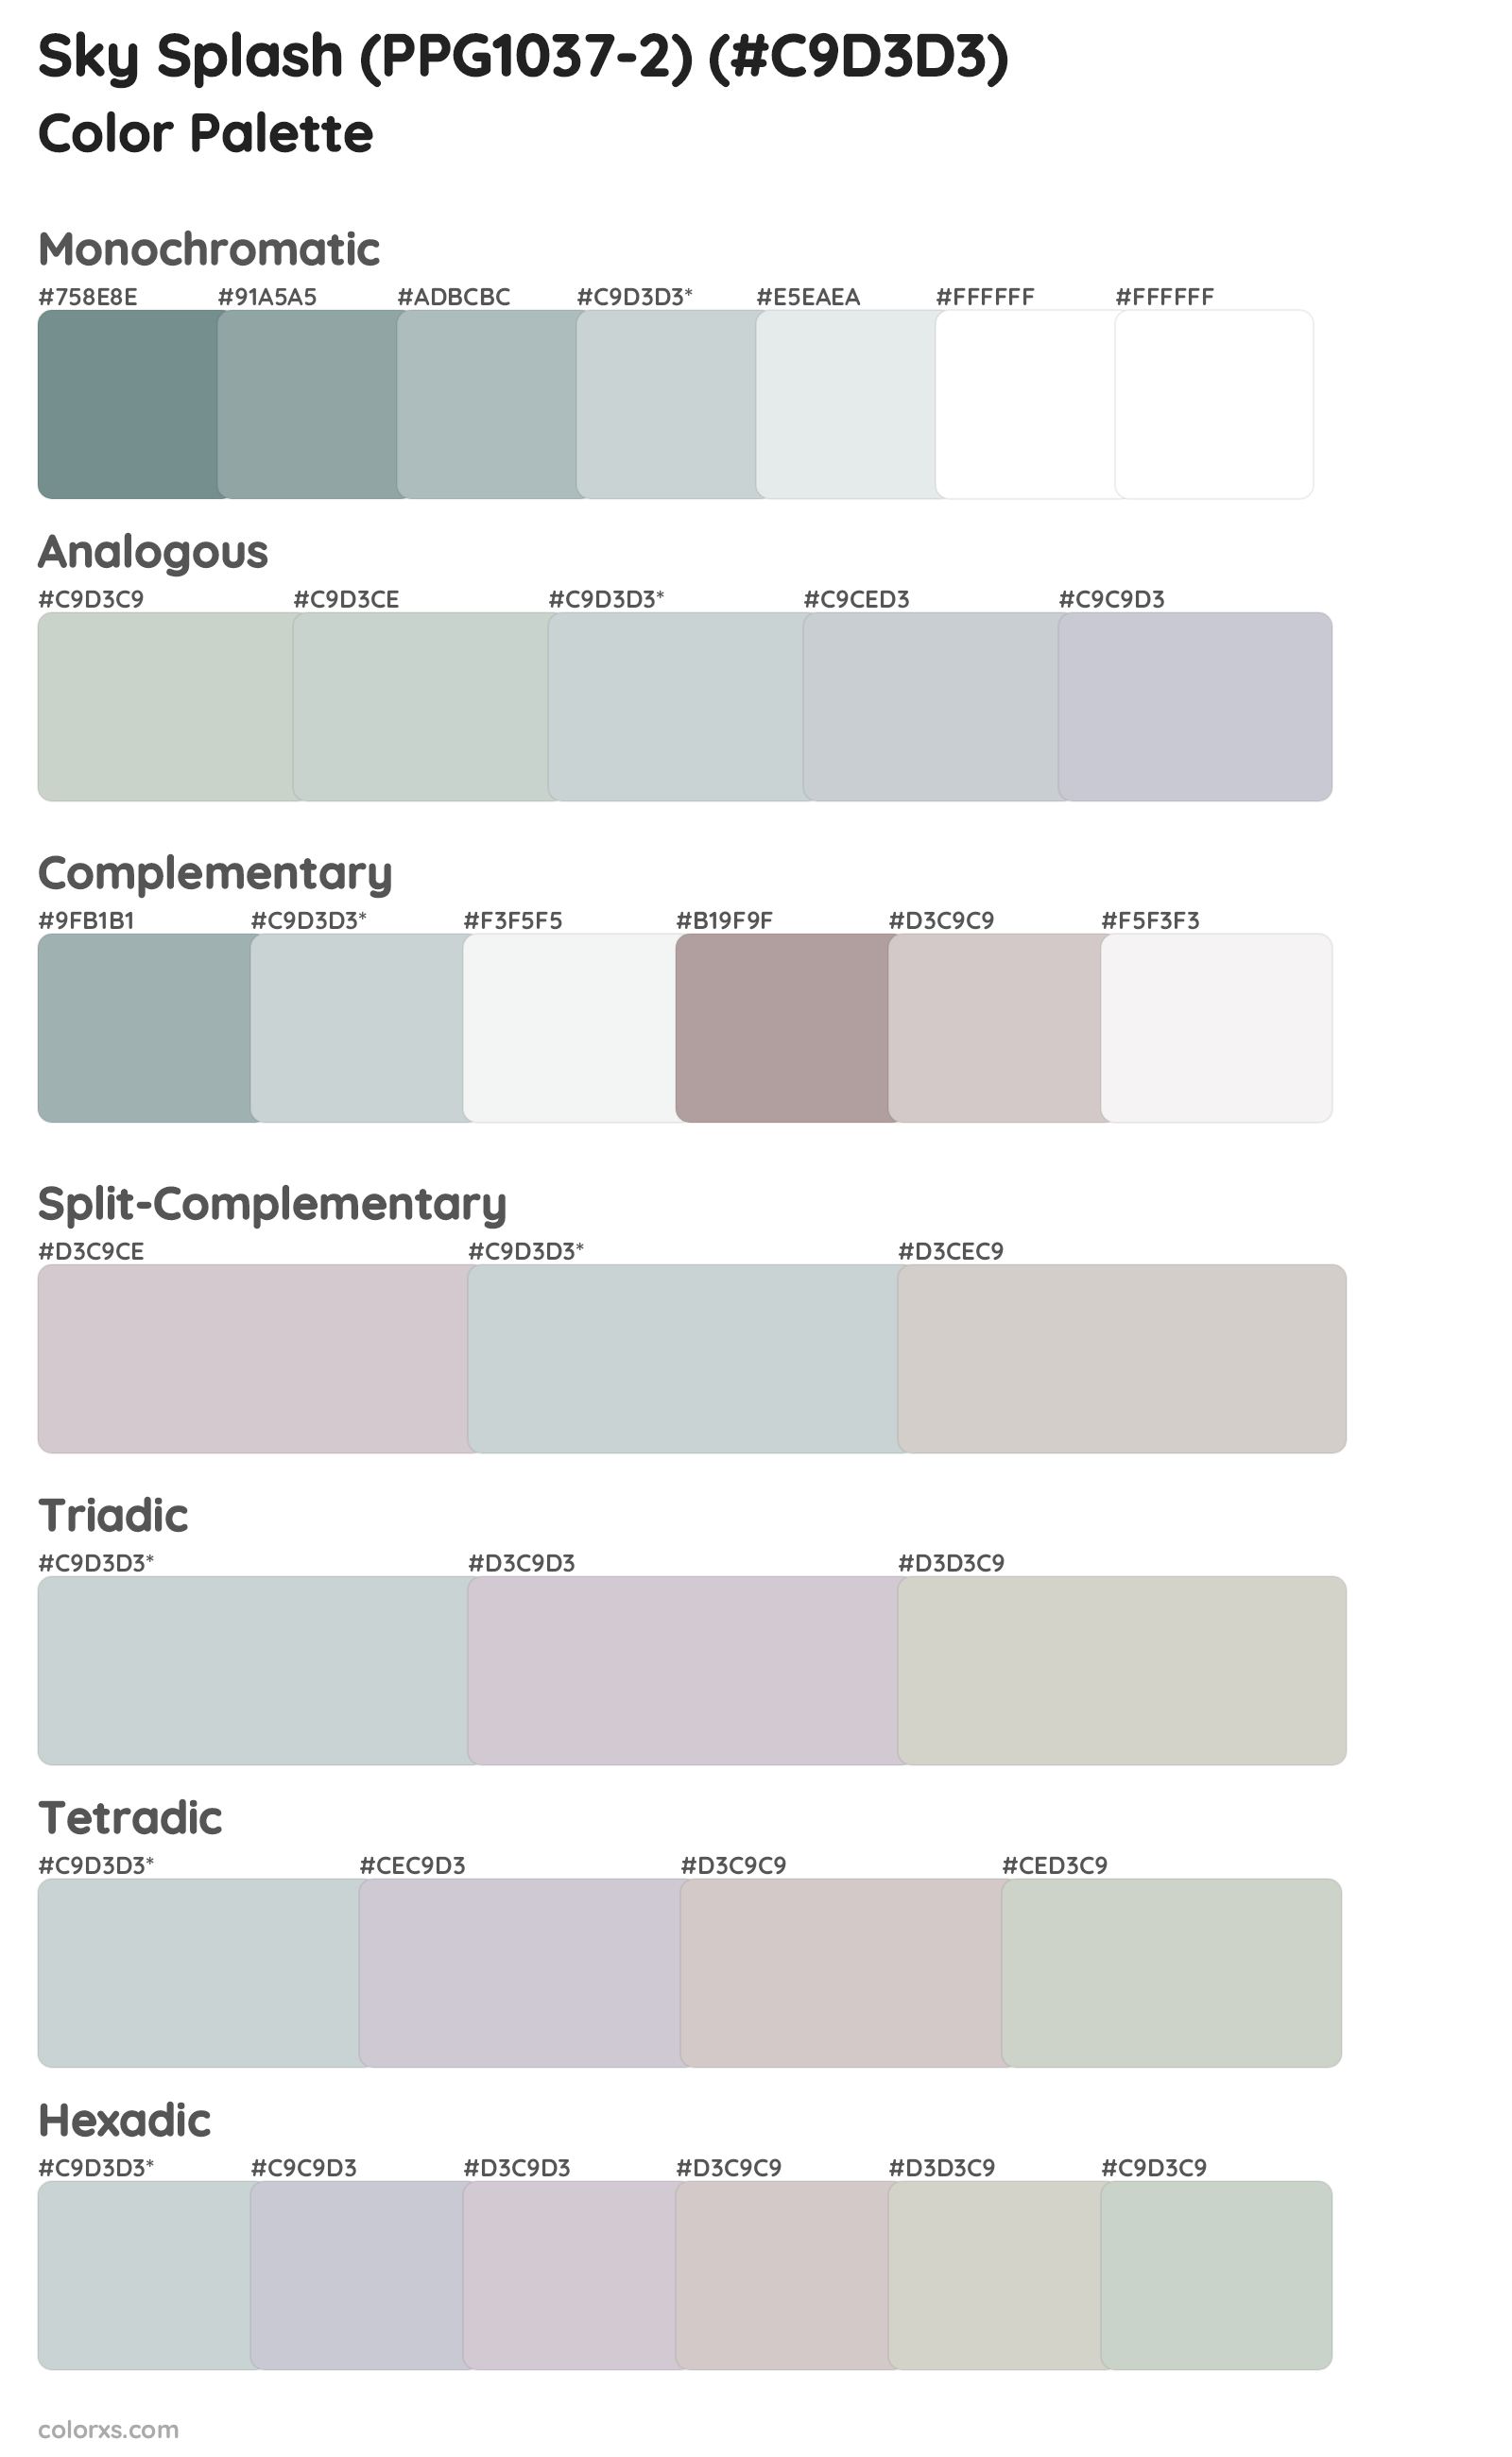 Sky Splash (PPG1037-2) Color Scheme Palettes